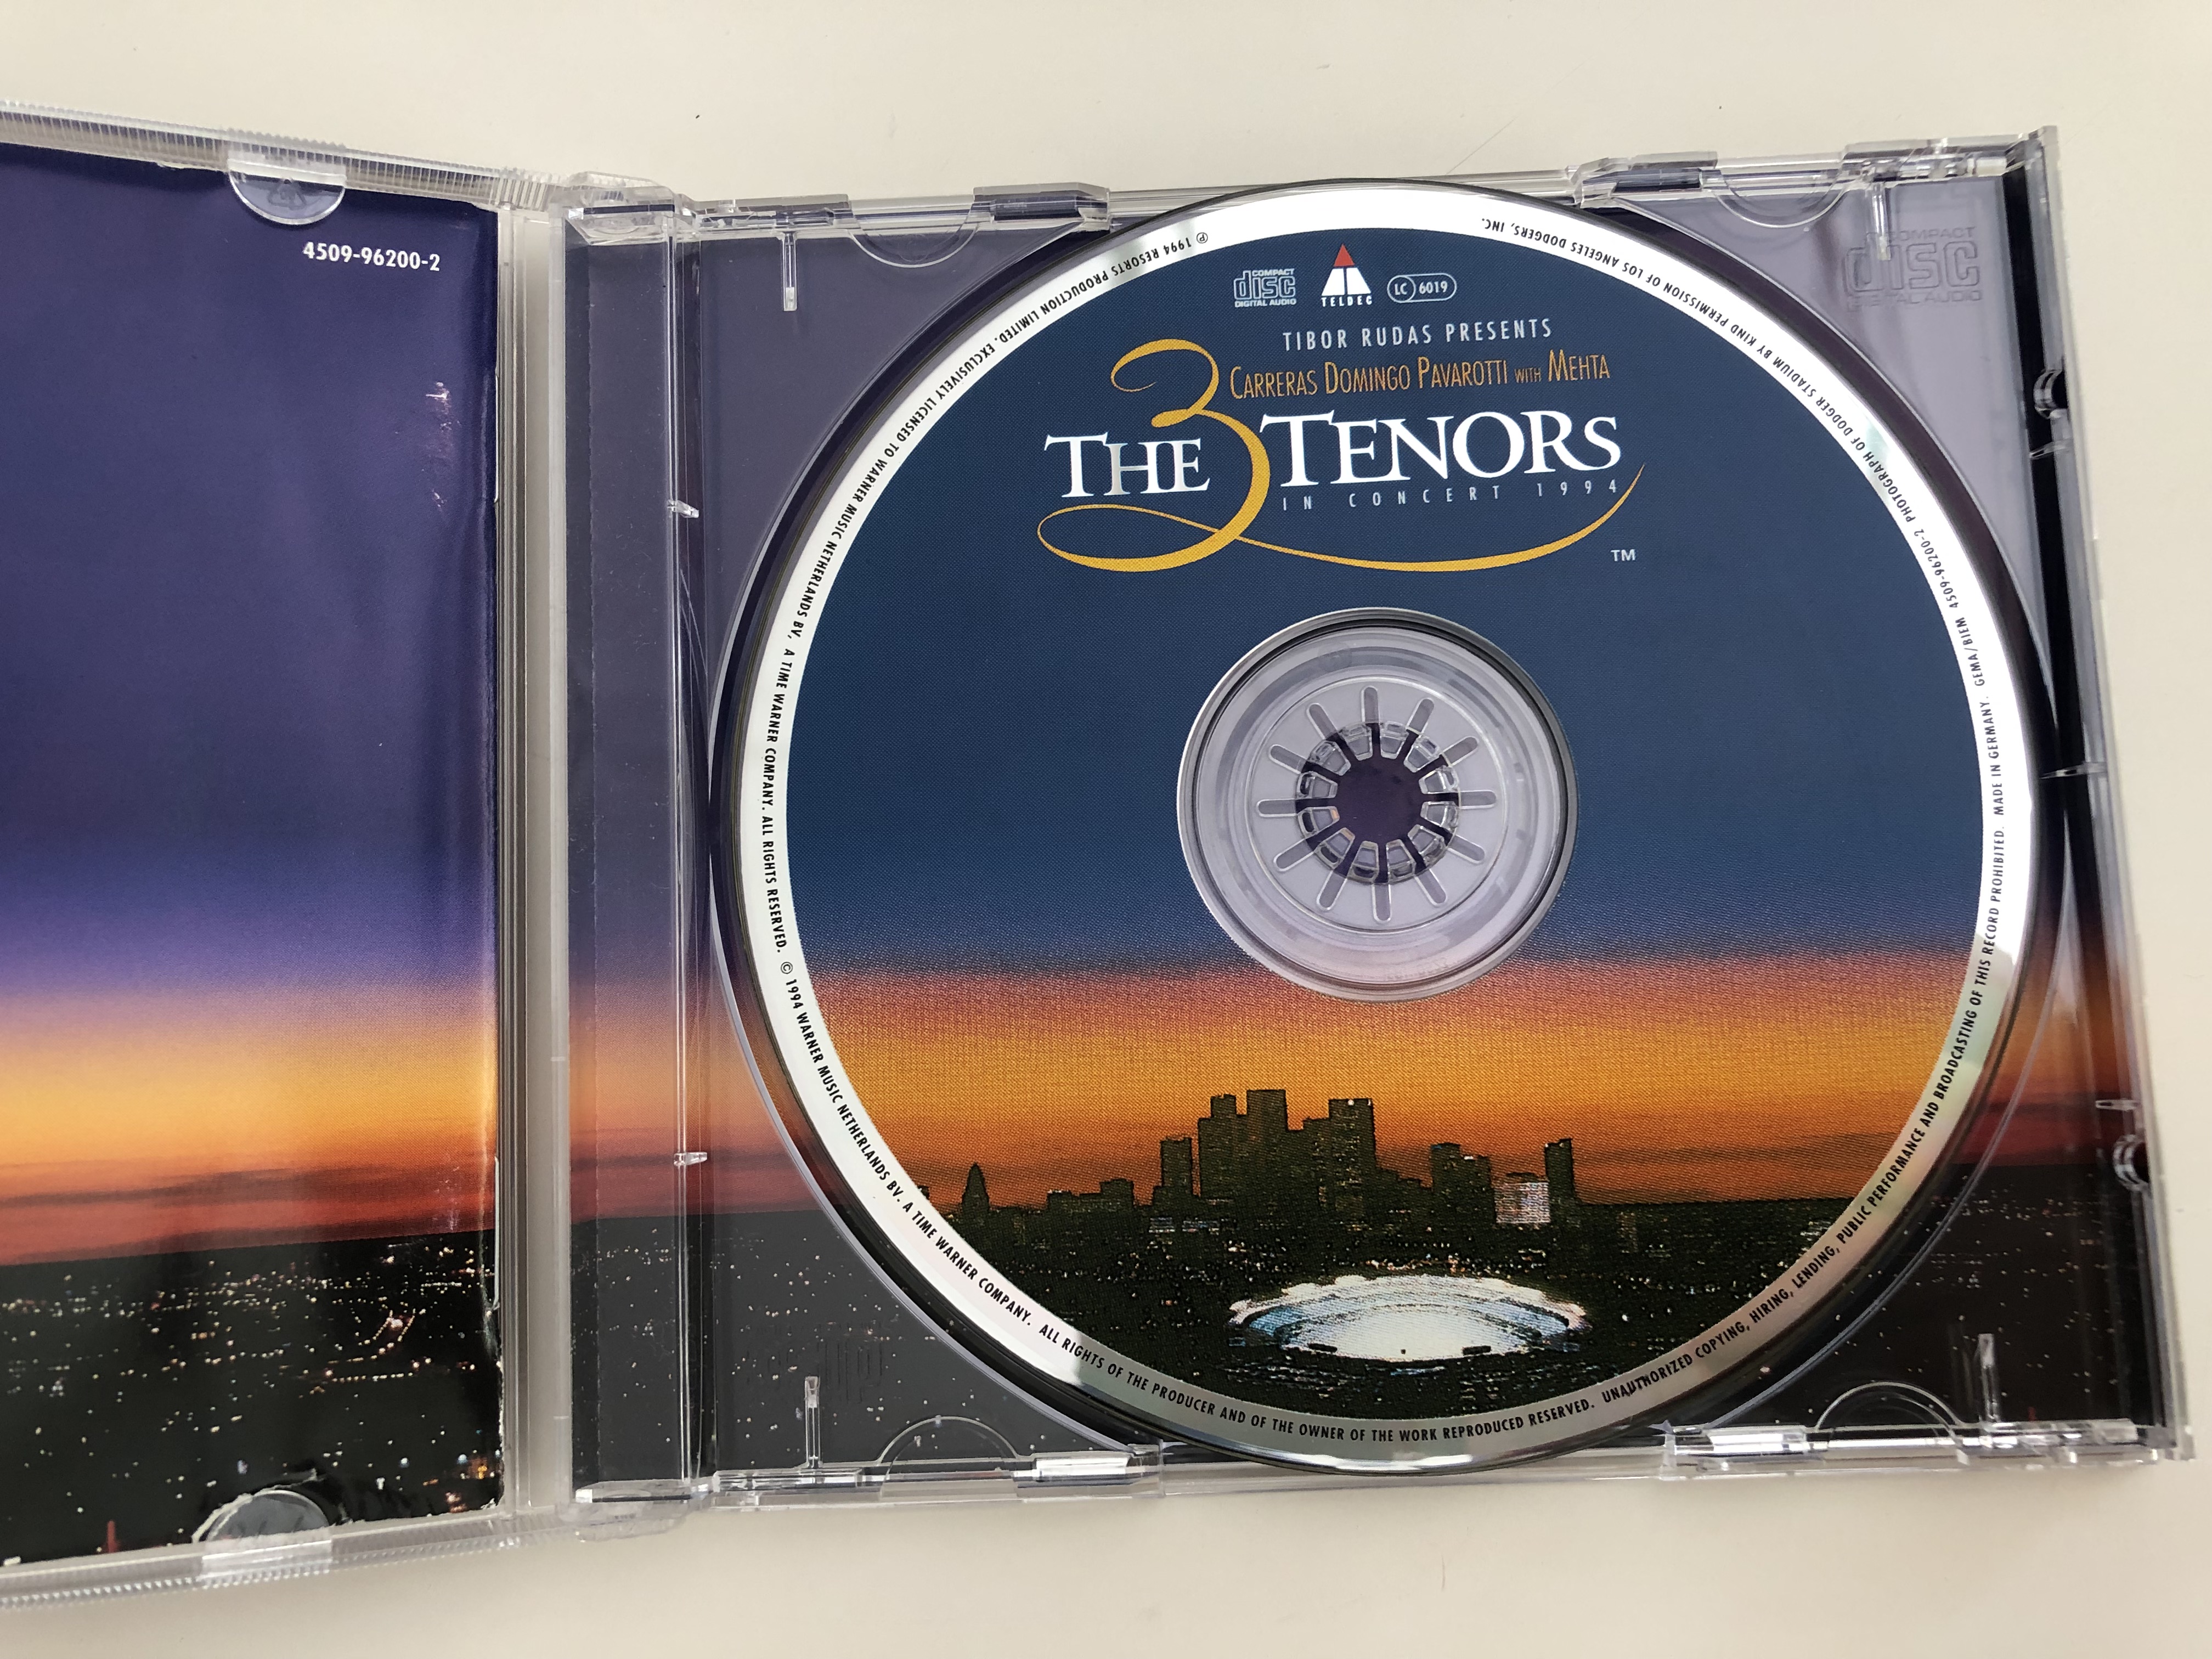 the-3-tenors-in-concert-1994-carreras-domingo-pavarotti-with-mehta-audio-cd-1994-teldec-we-805-2-.jpg